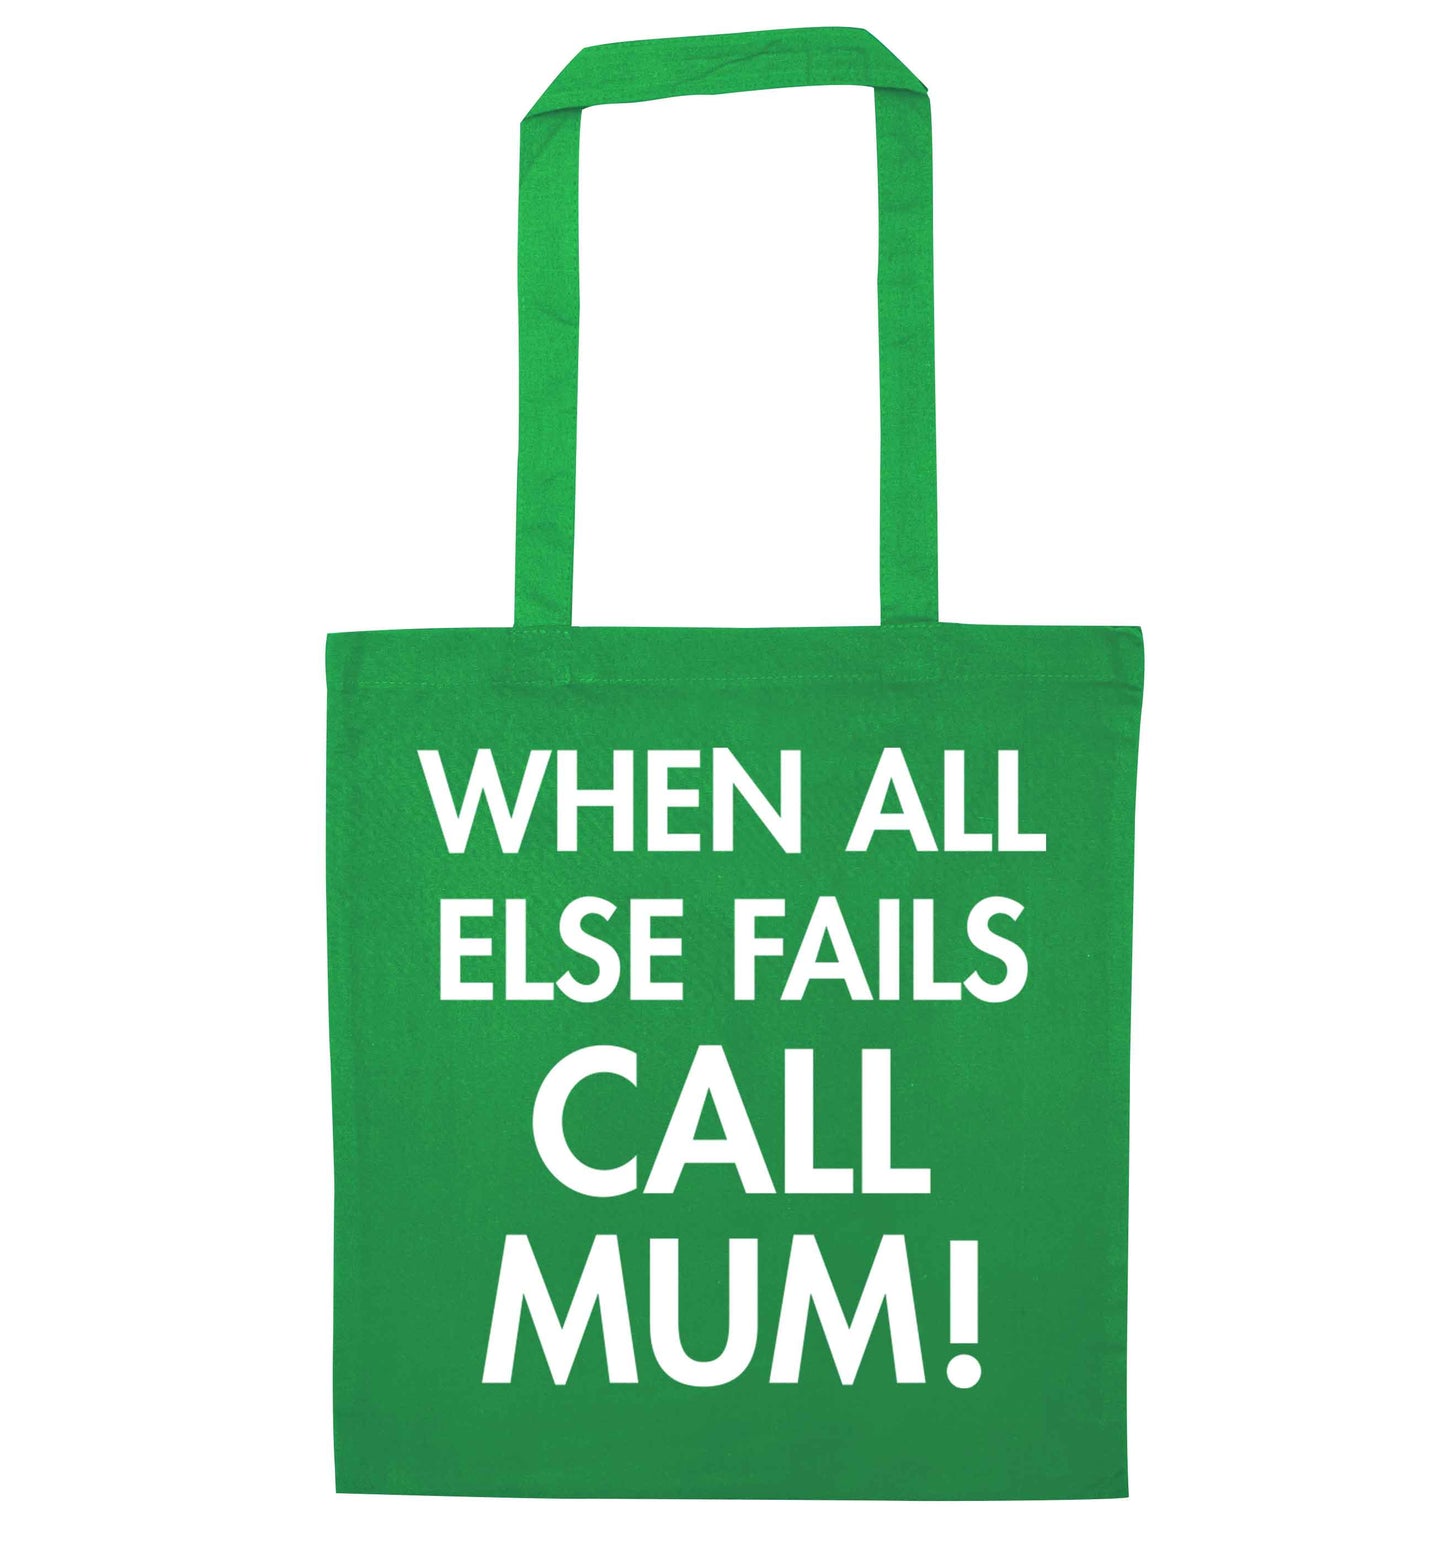 When all else fails call mum! green tote bag